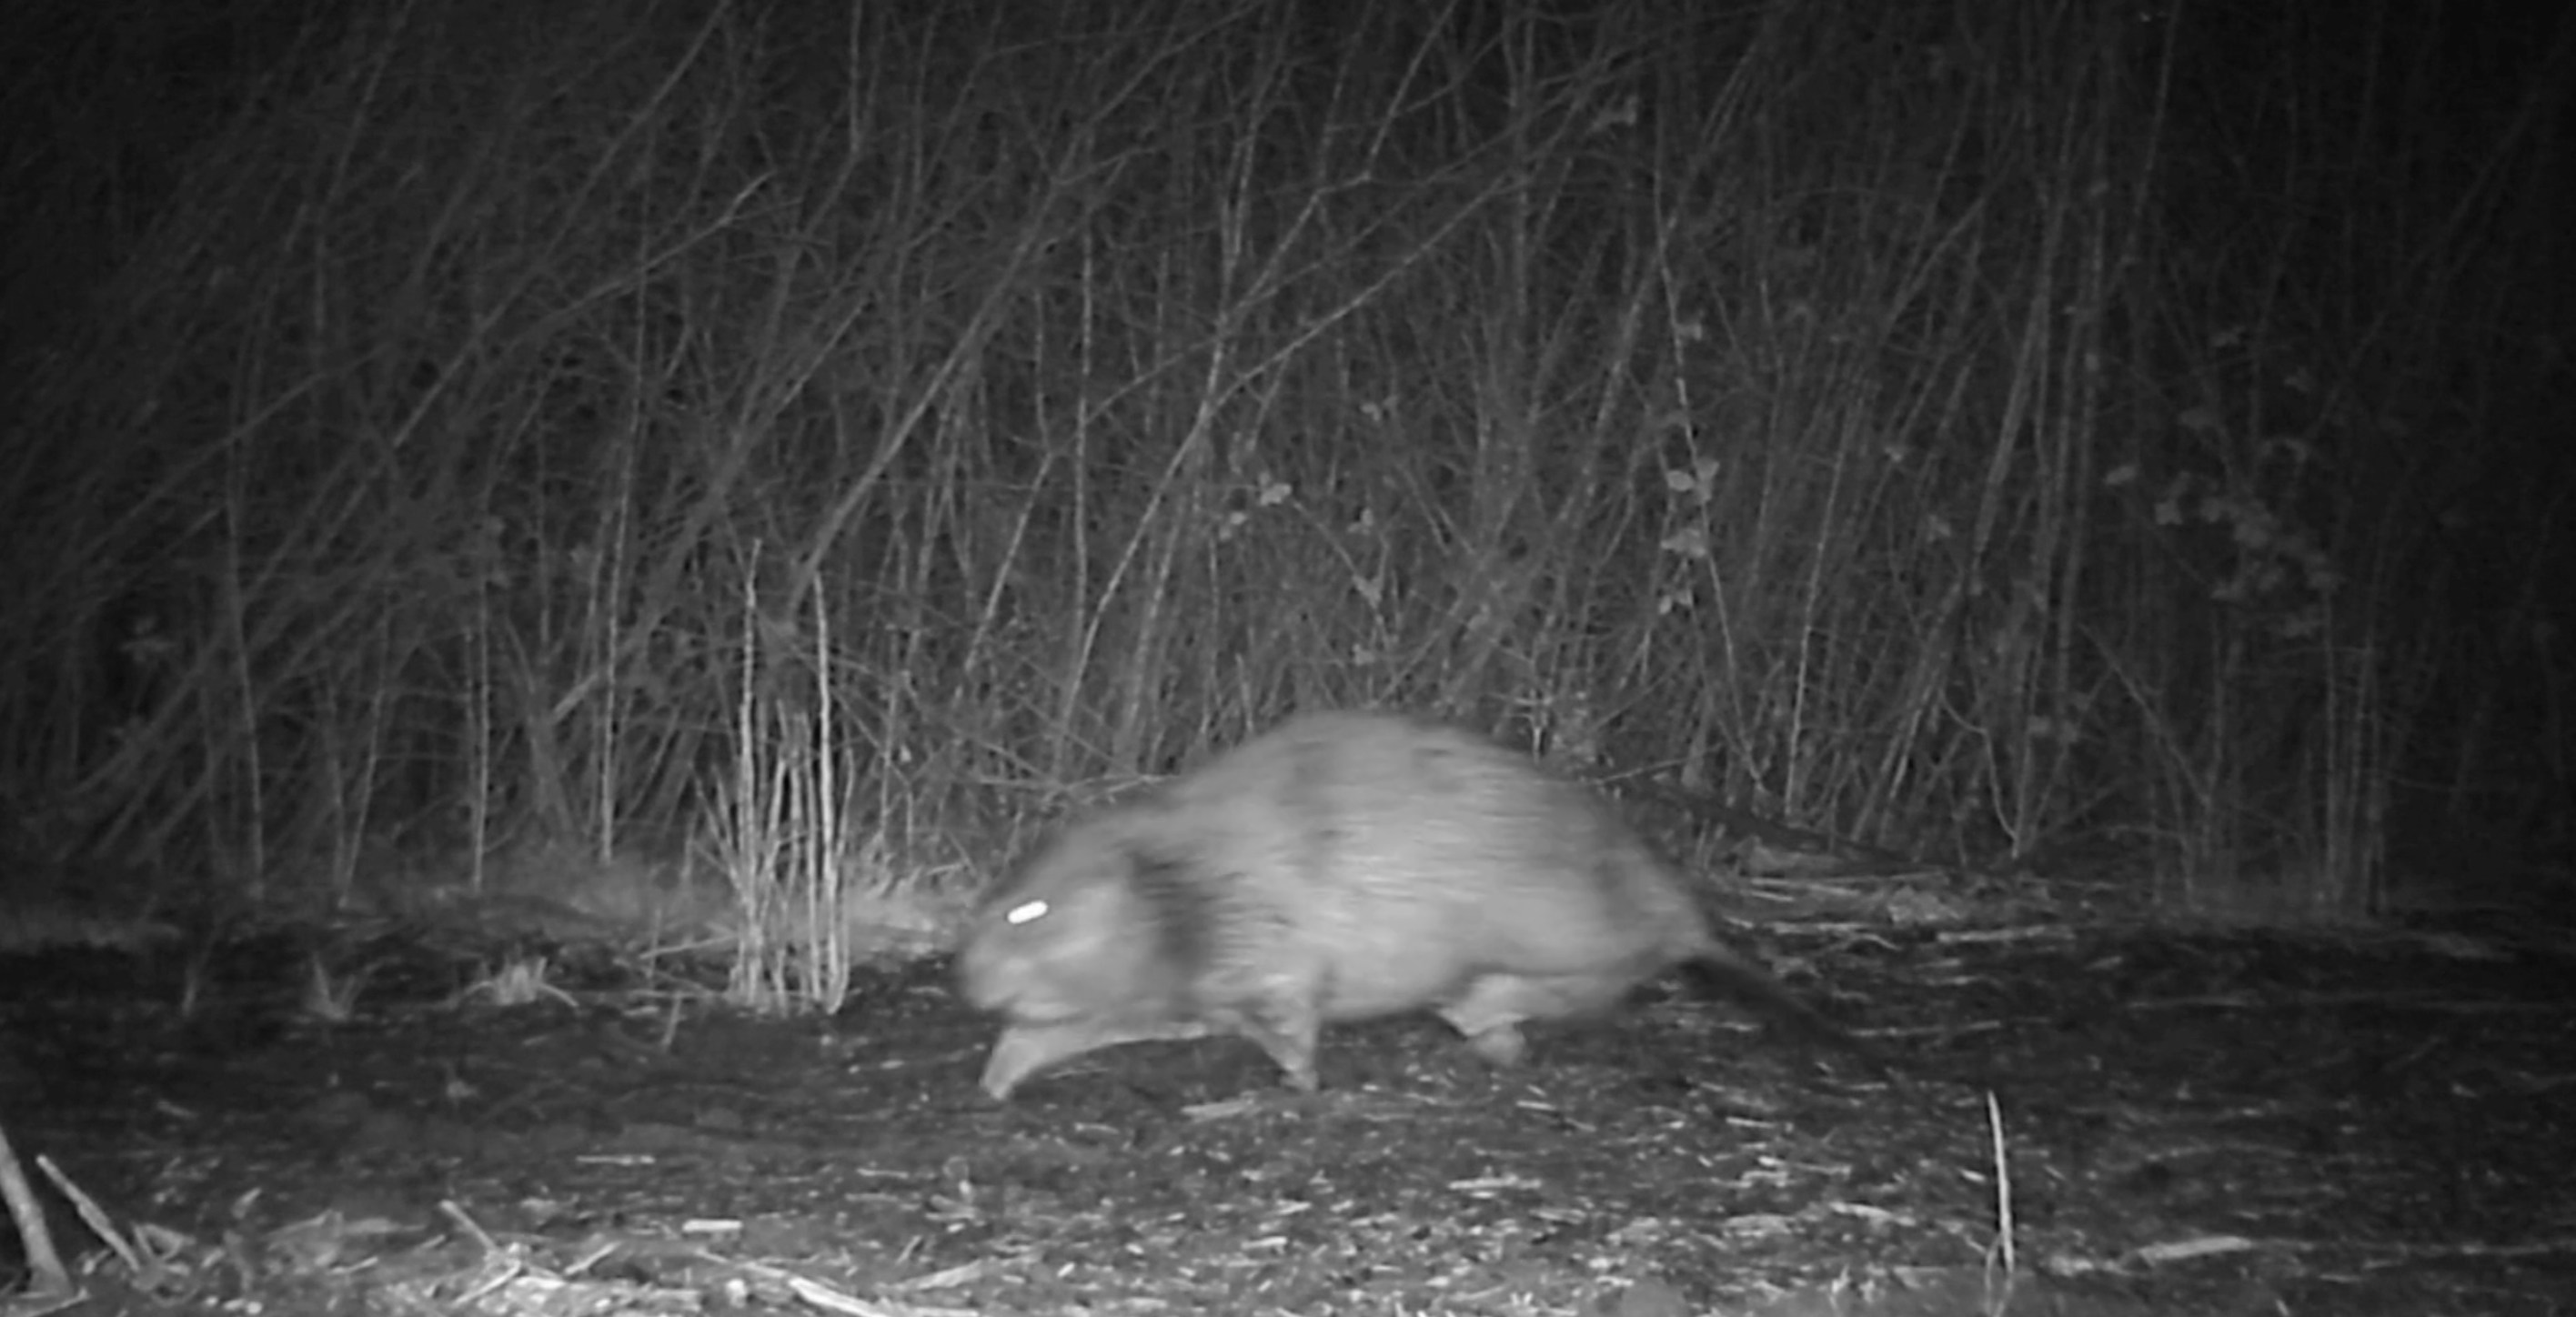 A beaver patrols its new habitat in Ealing, west London